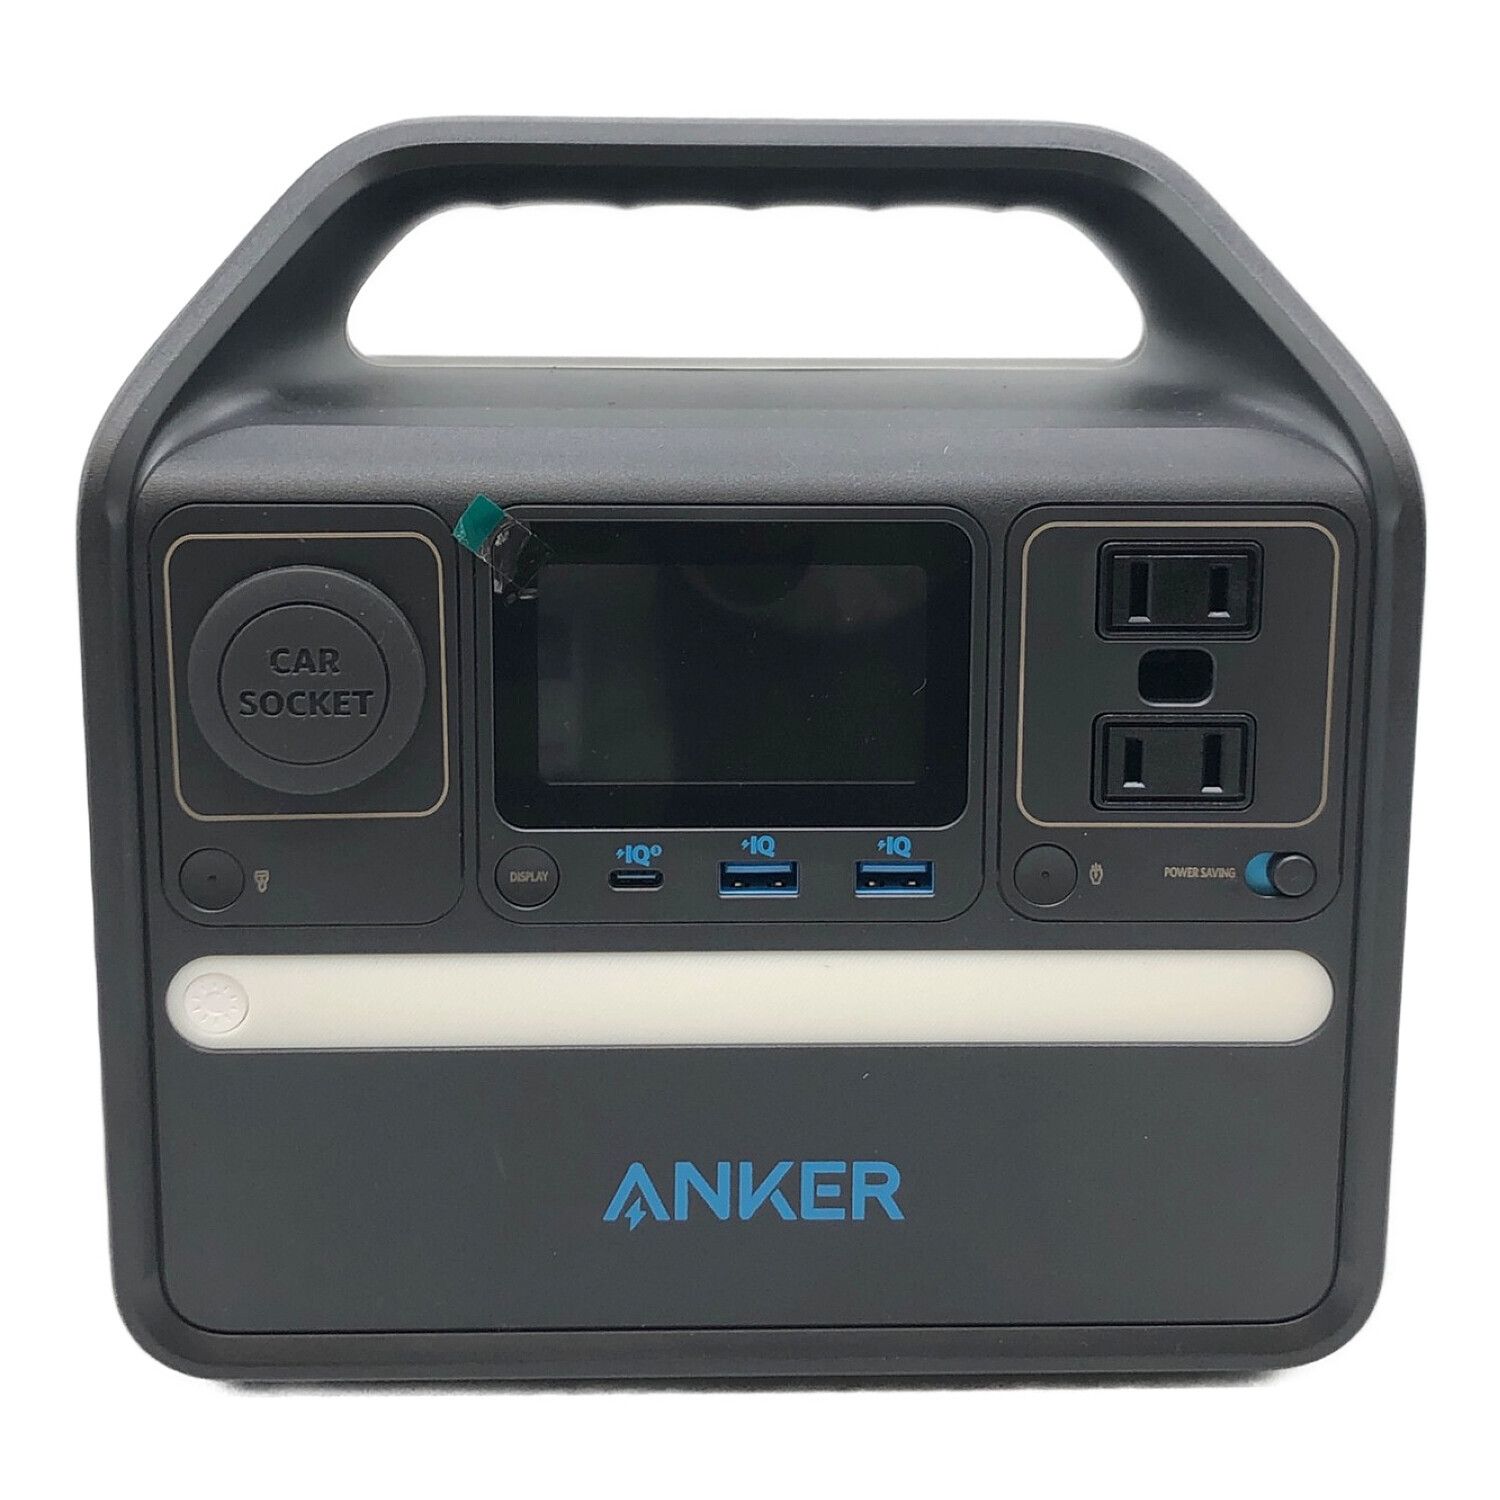 Anker (アンカー) ポータブル電源 Portable Power Station 521 動作 